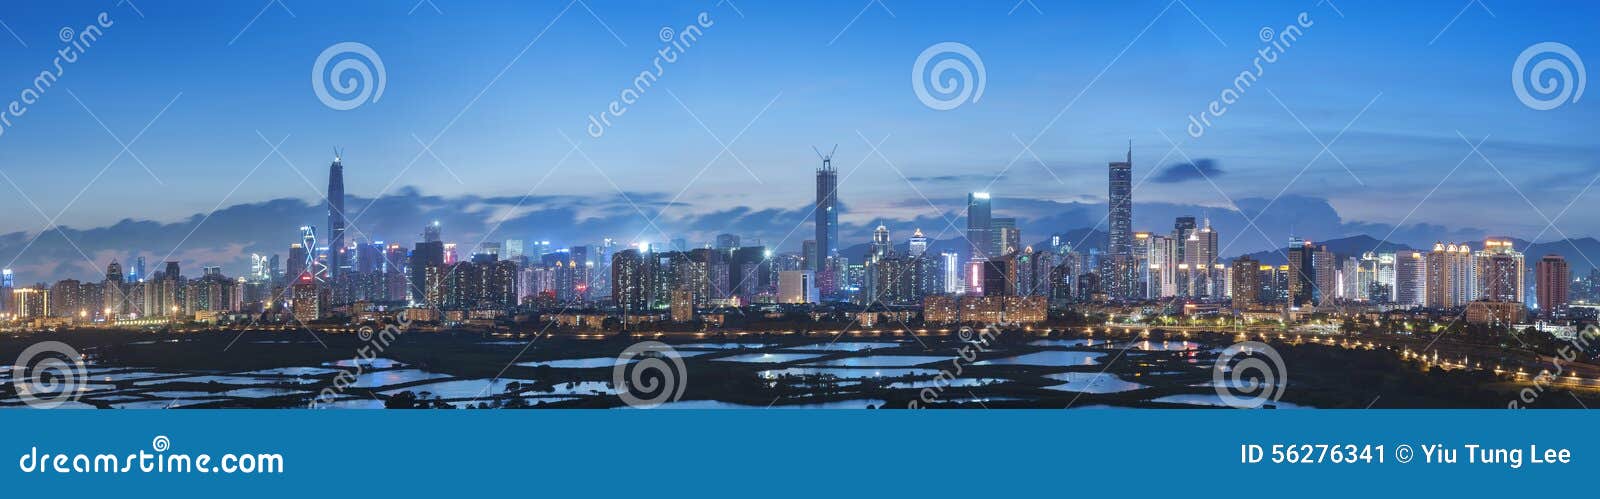 skyline of shenzhen city, china at twilight. viewed from hong ko